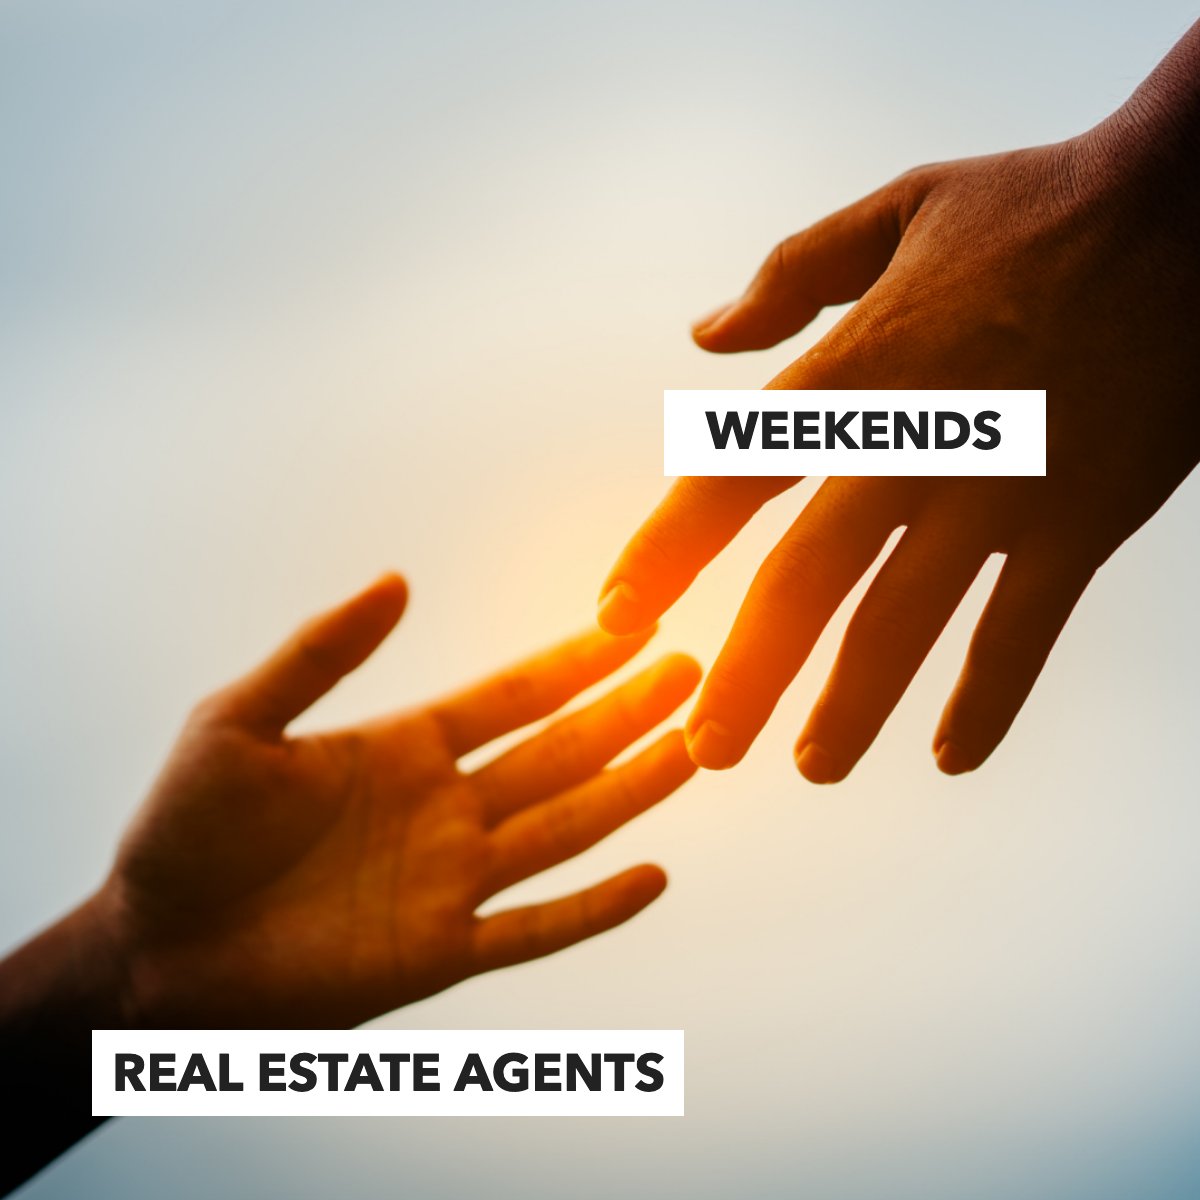 Real estate agents watching the weekend slip away like... 😑

#funny #weekends #agents #realestatememe #realestateagents #real estate
 #marcorealtor #marcoschoenrock #mvprealty